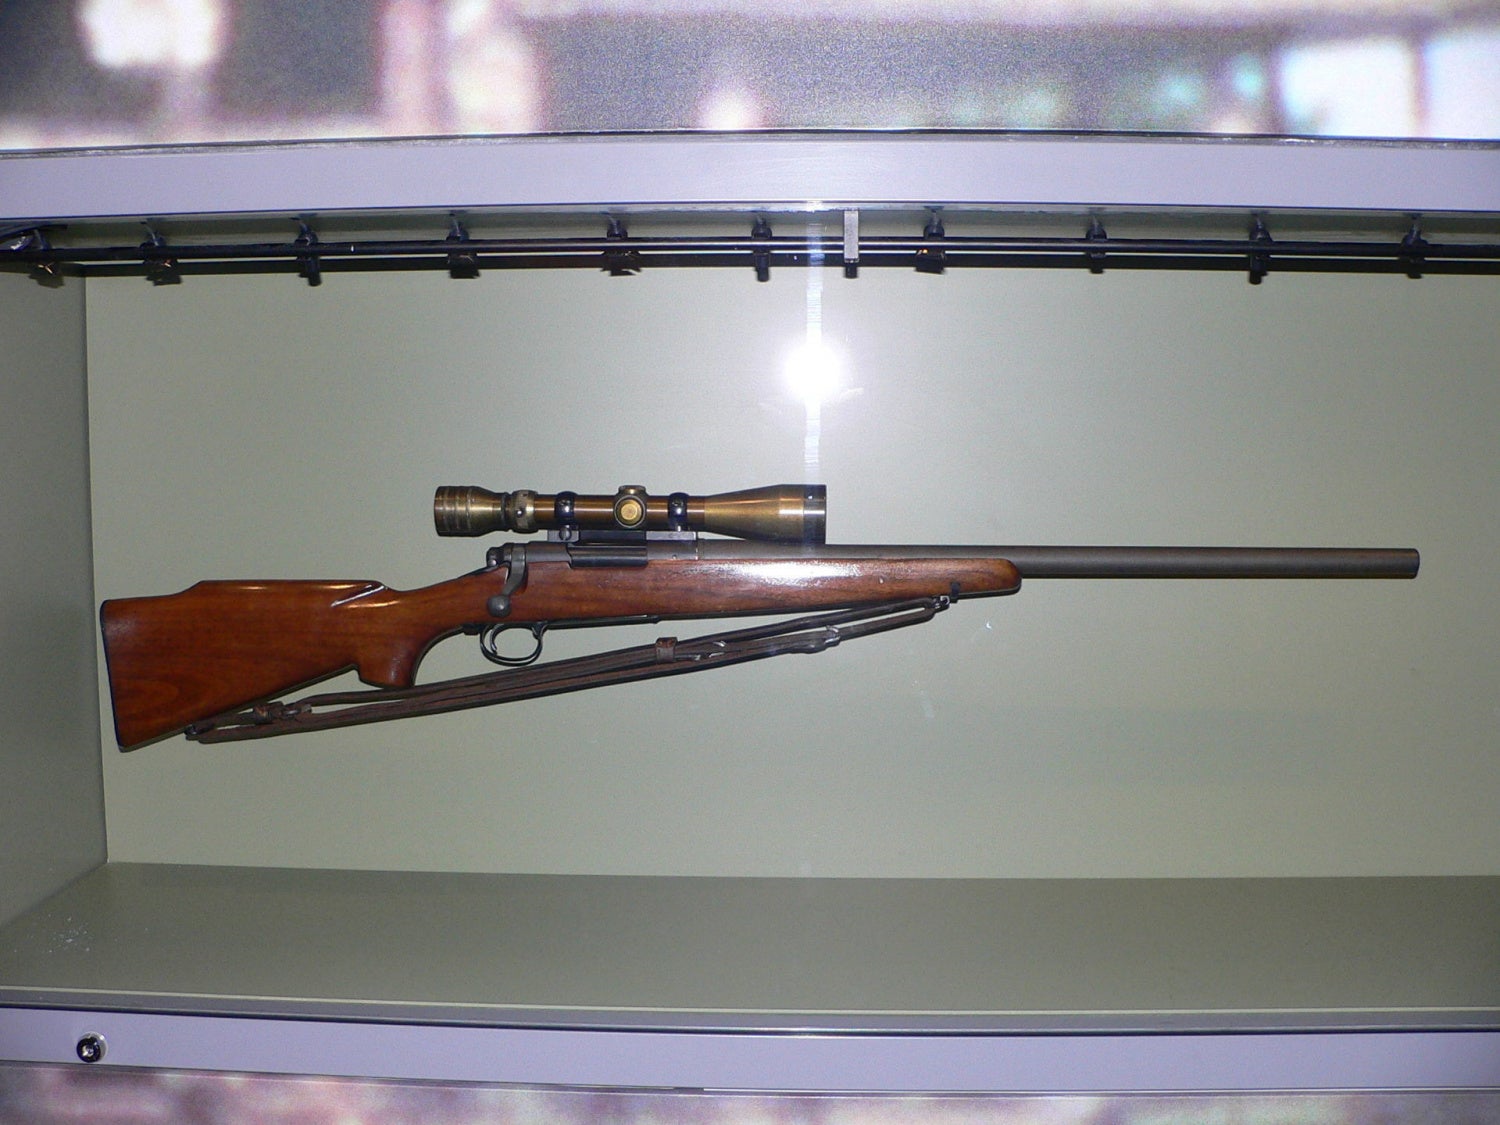 POTD: One Shot, One Kill - M40 Sniper Rifle with Redfield 3x9x40 scope